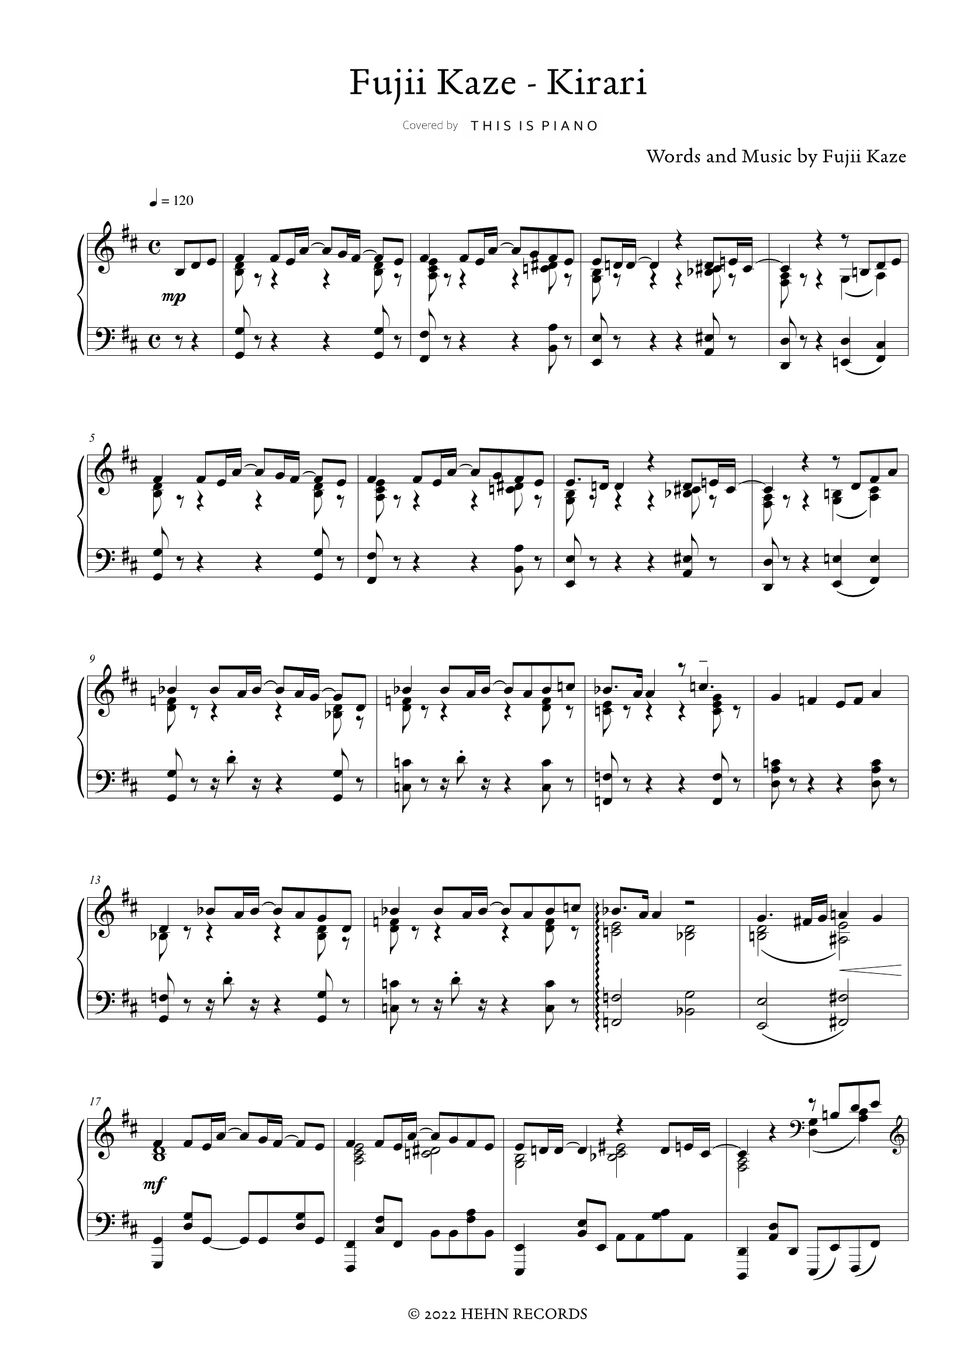 Fujii Kaze - Kirari Sheets by THIS IS PIANO